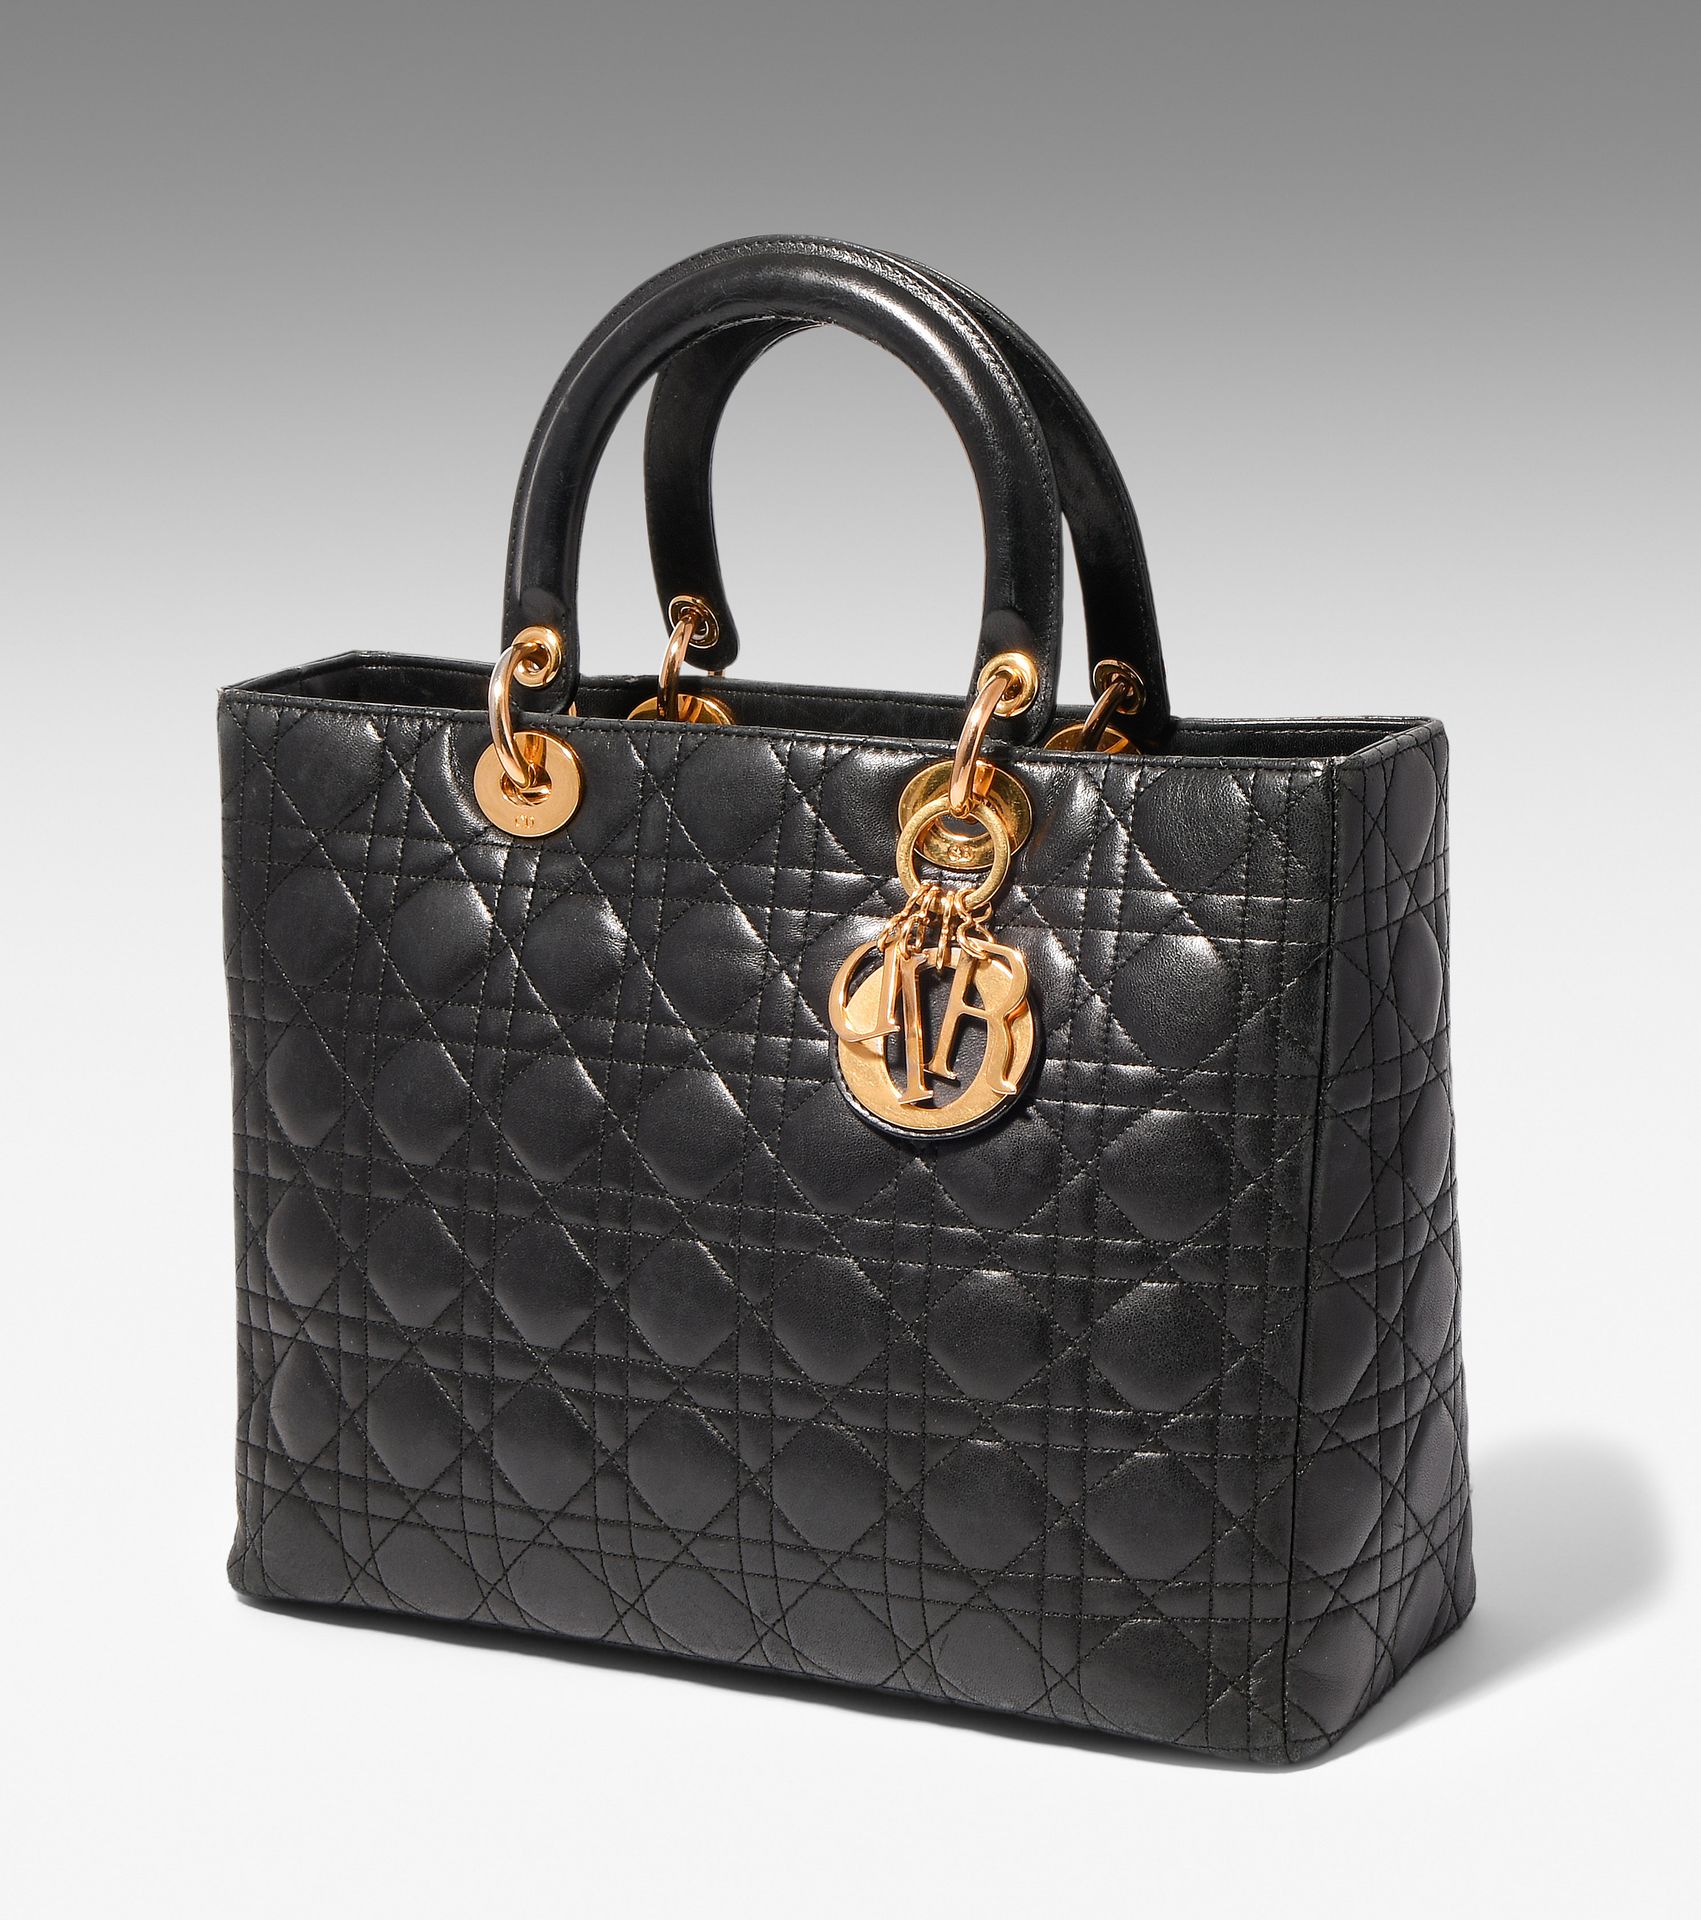 Dior, Handtasche "Lady Dior" Dior, handbag "Lady Dior".
Made of black quilted le&hellip;